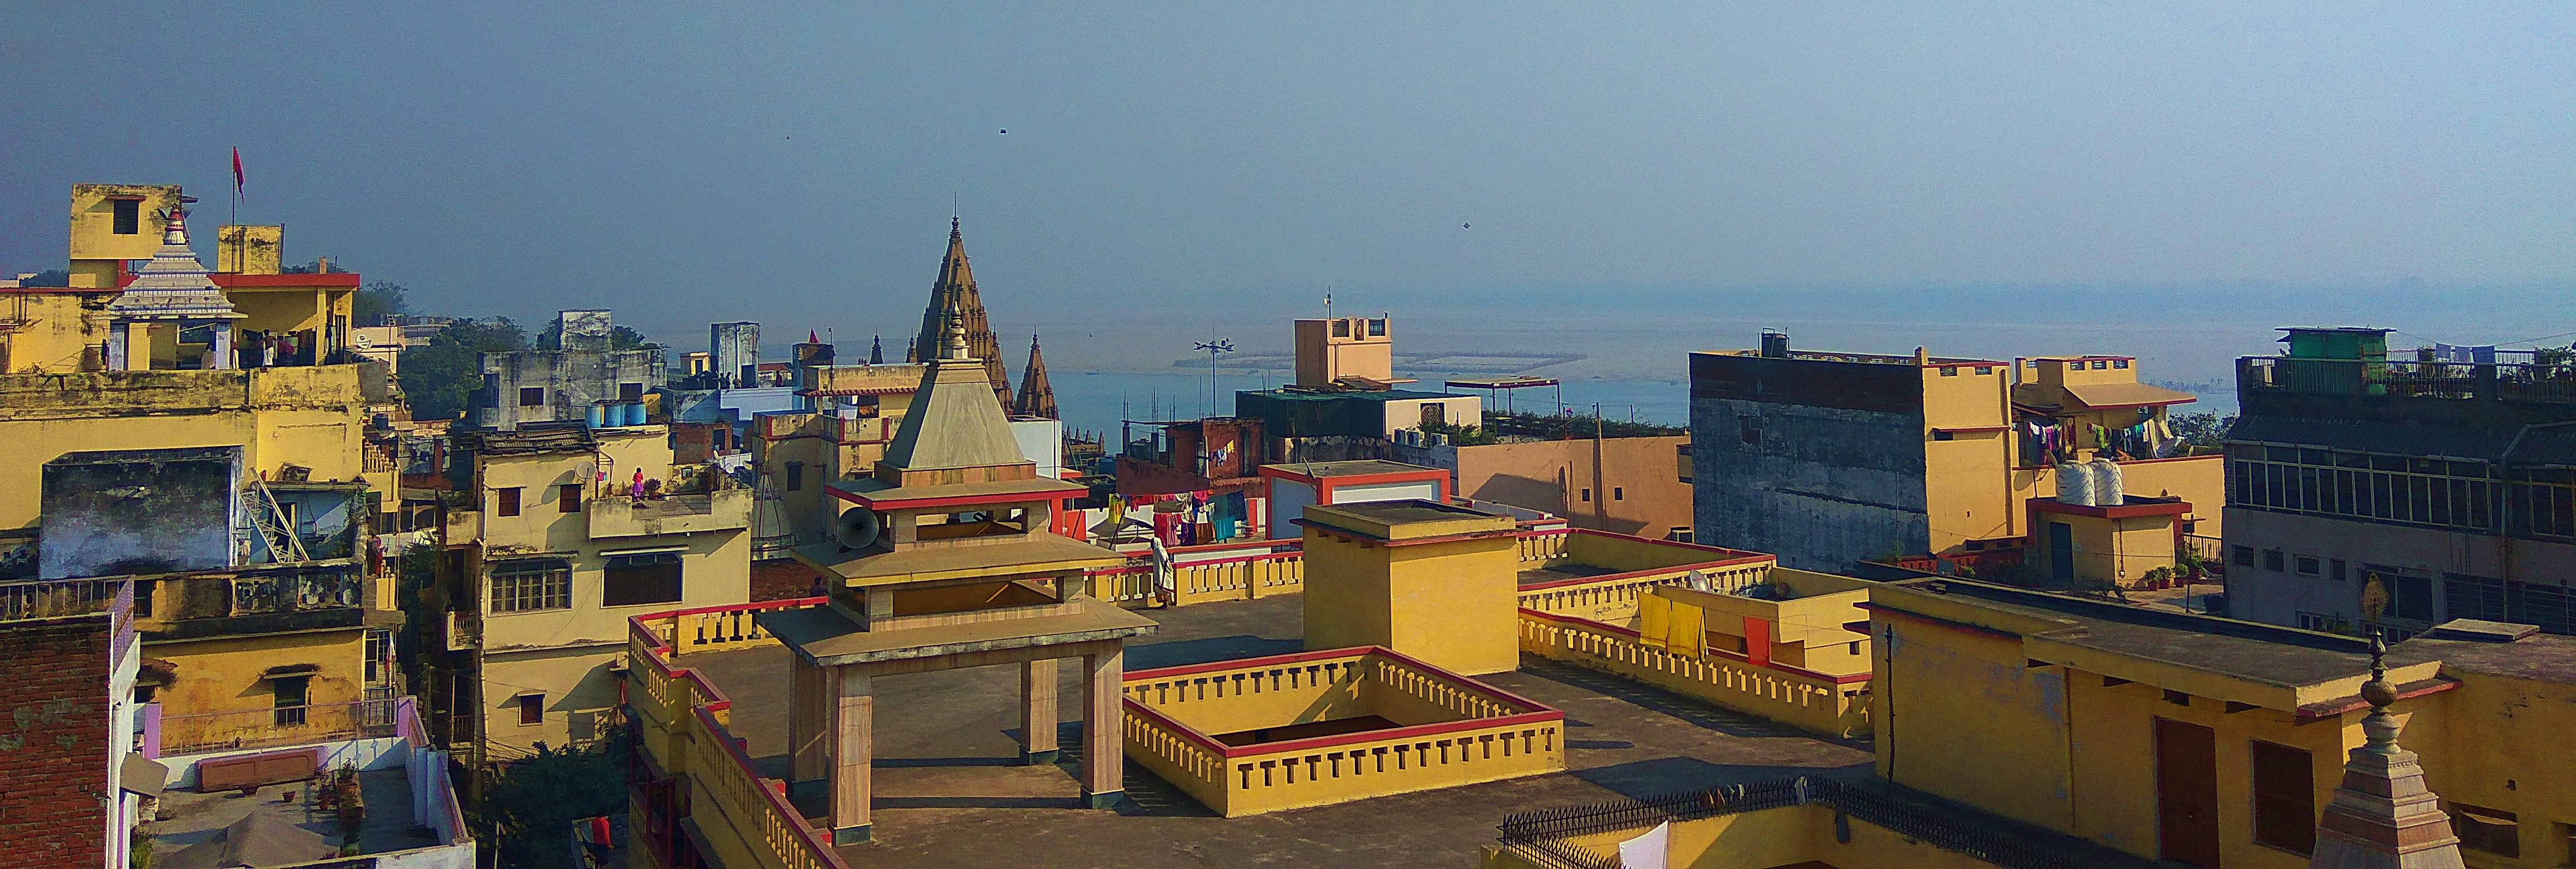 River Ganges, hotel rooftop, hotel banaras haveli, varanasi, uttar pradesh, india